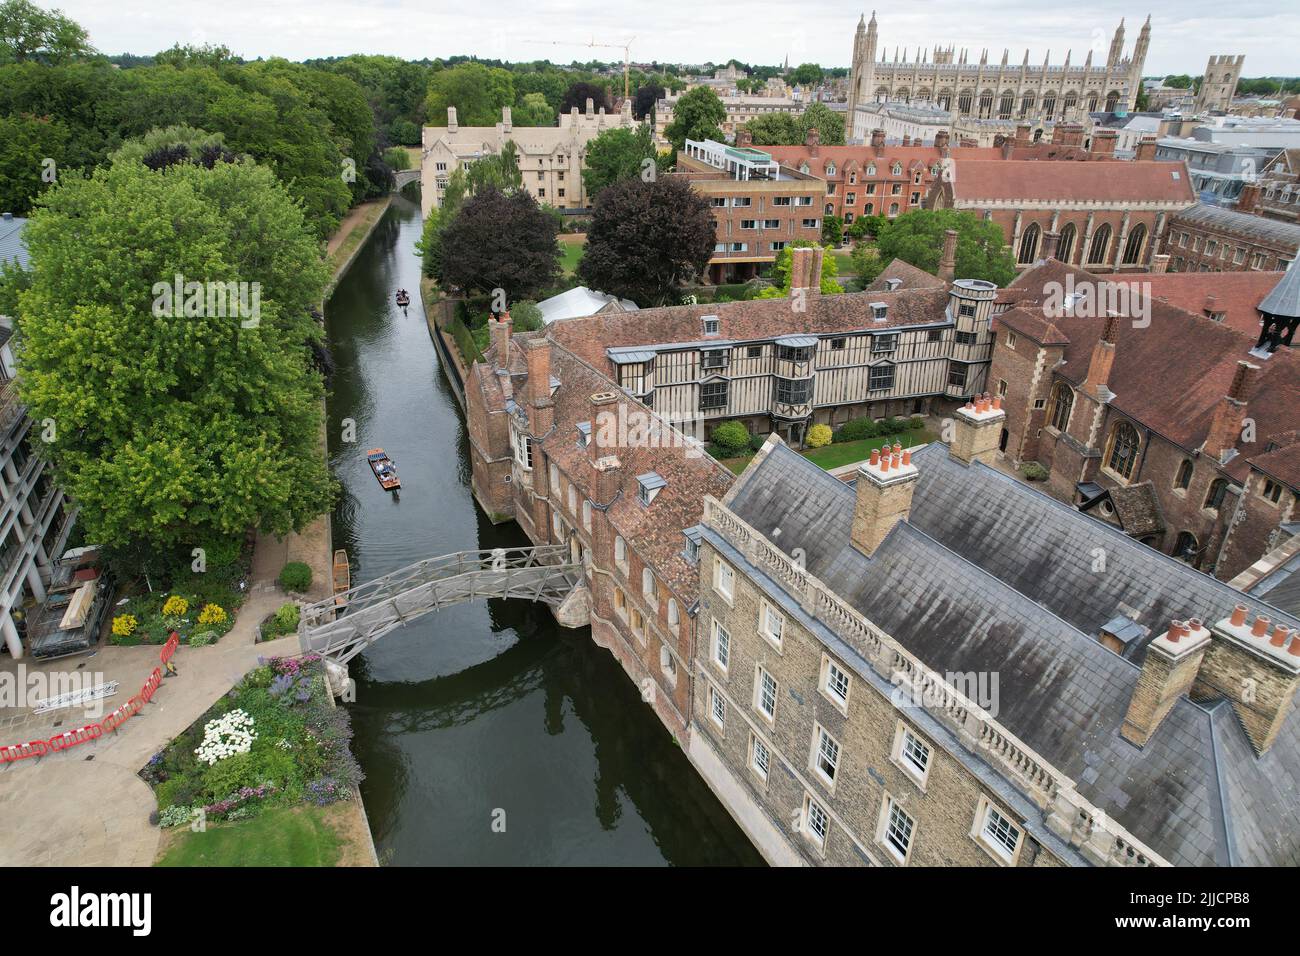 Queens' College Cambridge City centre UK drone aerial view Stock Photo